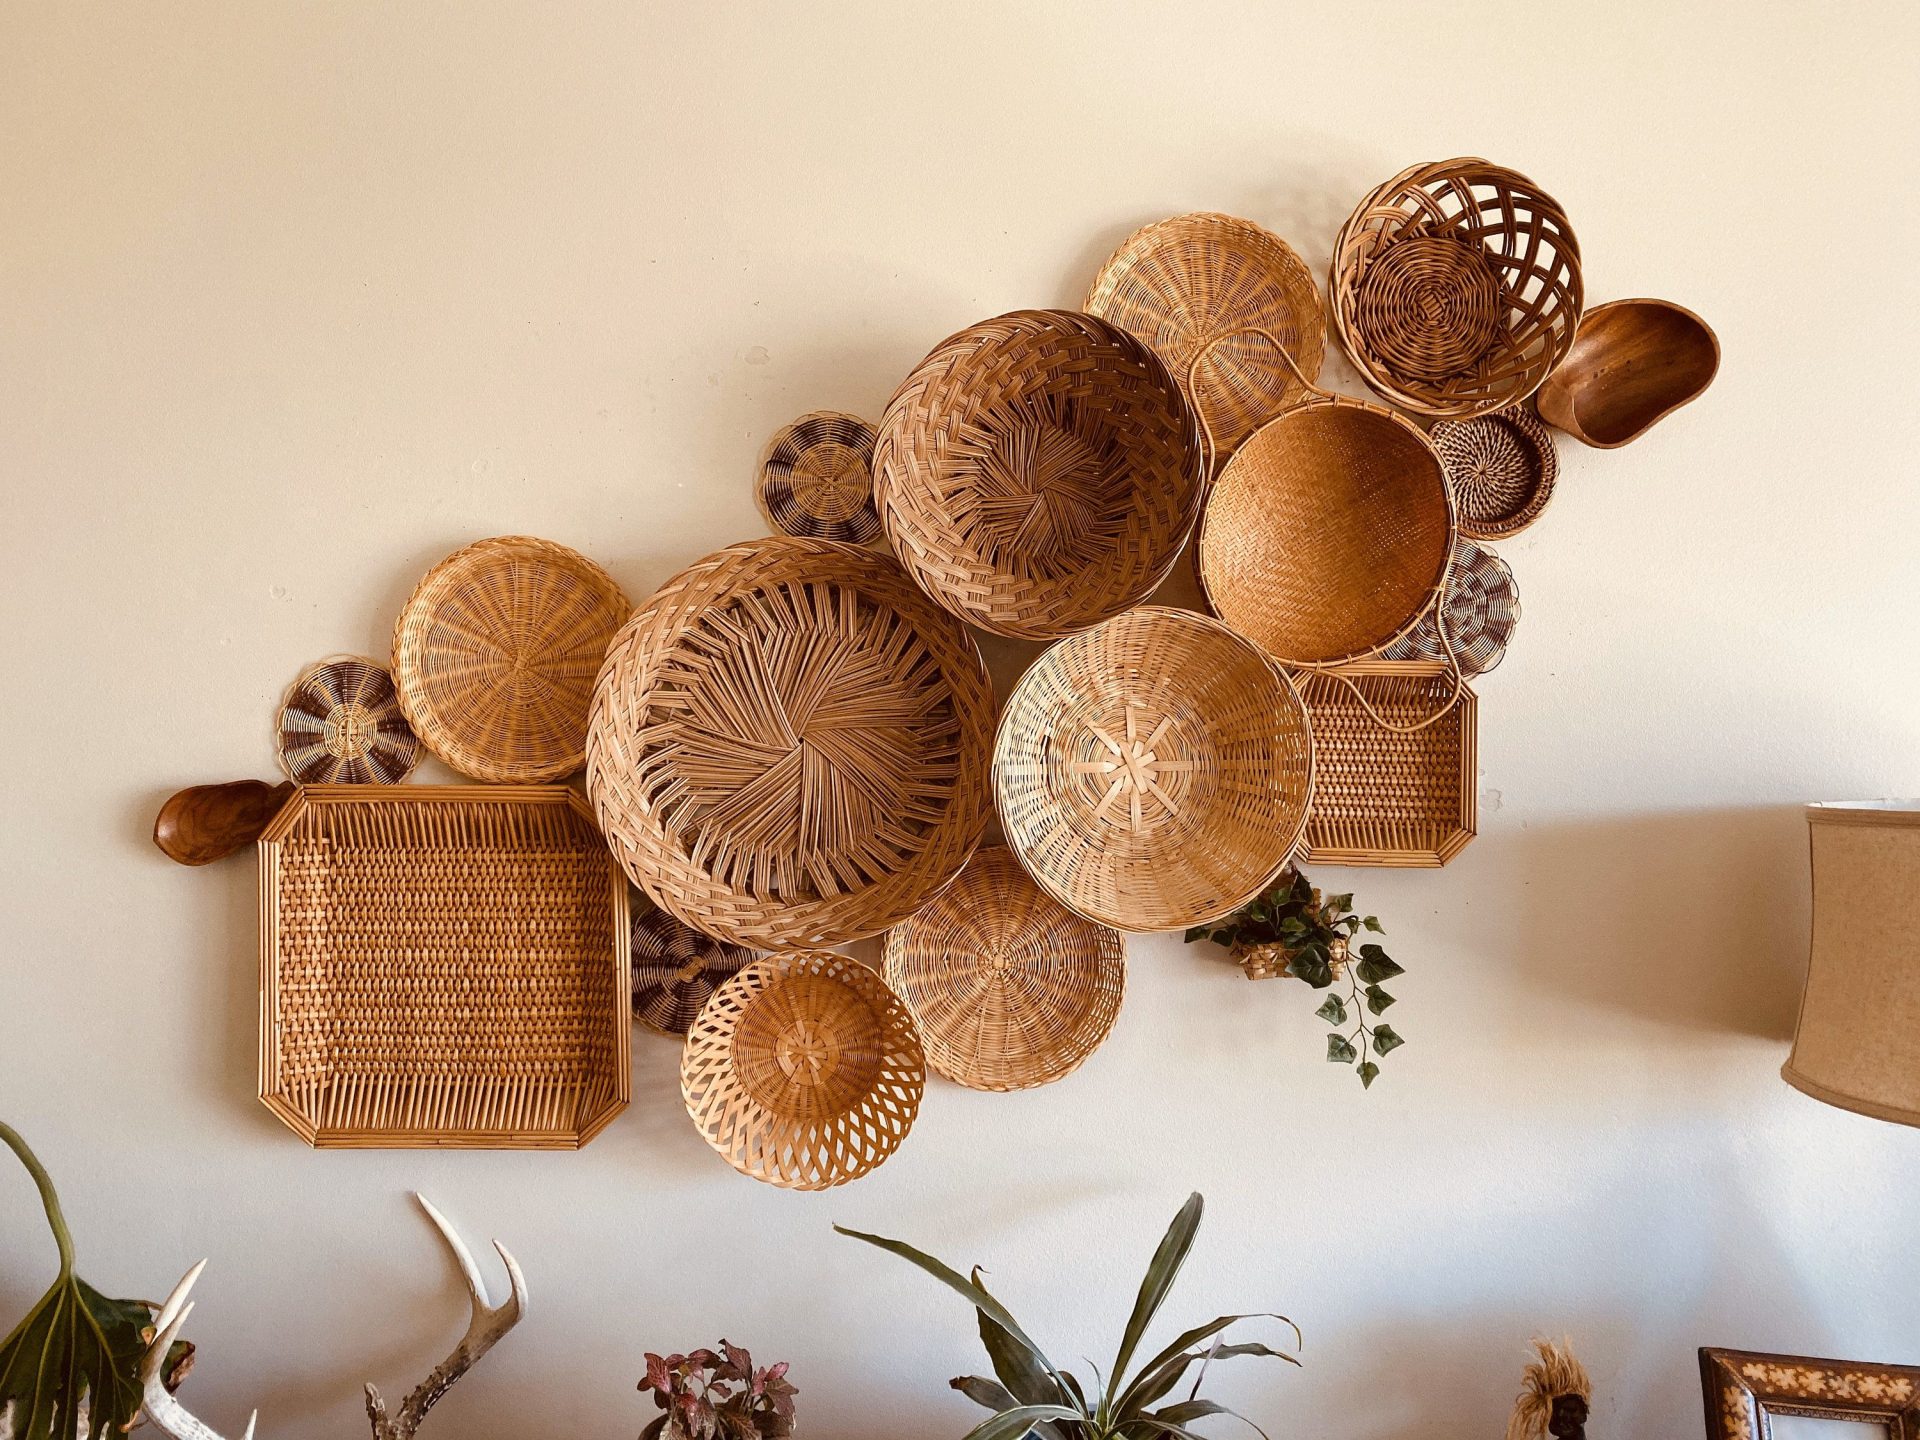 Woven Baskets Wall Decor Idea